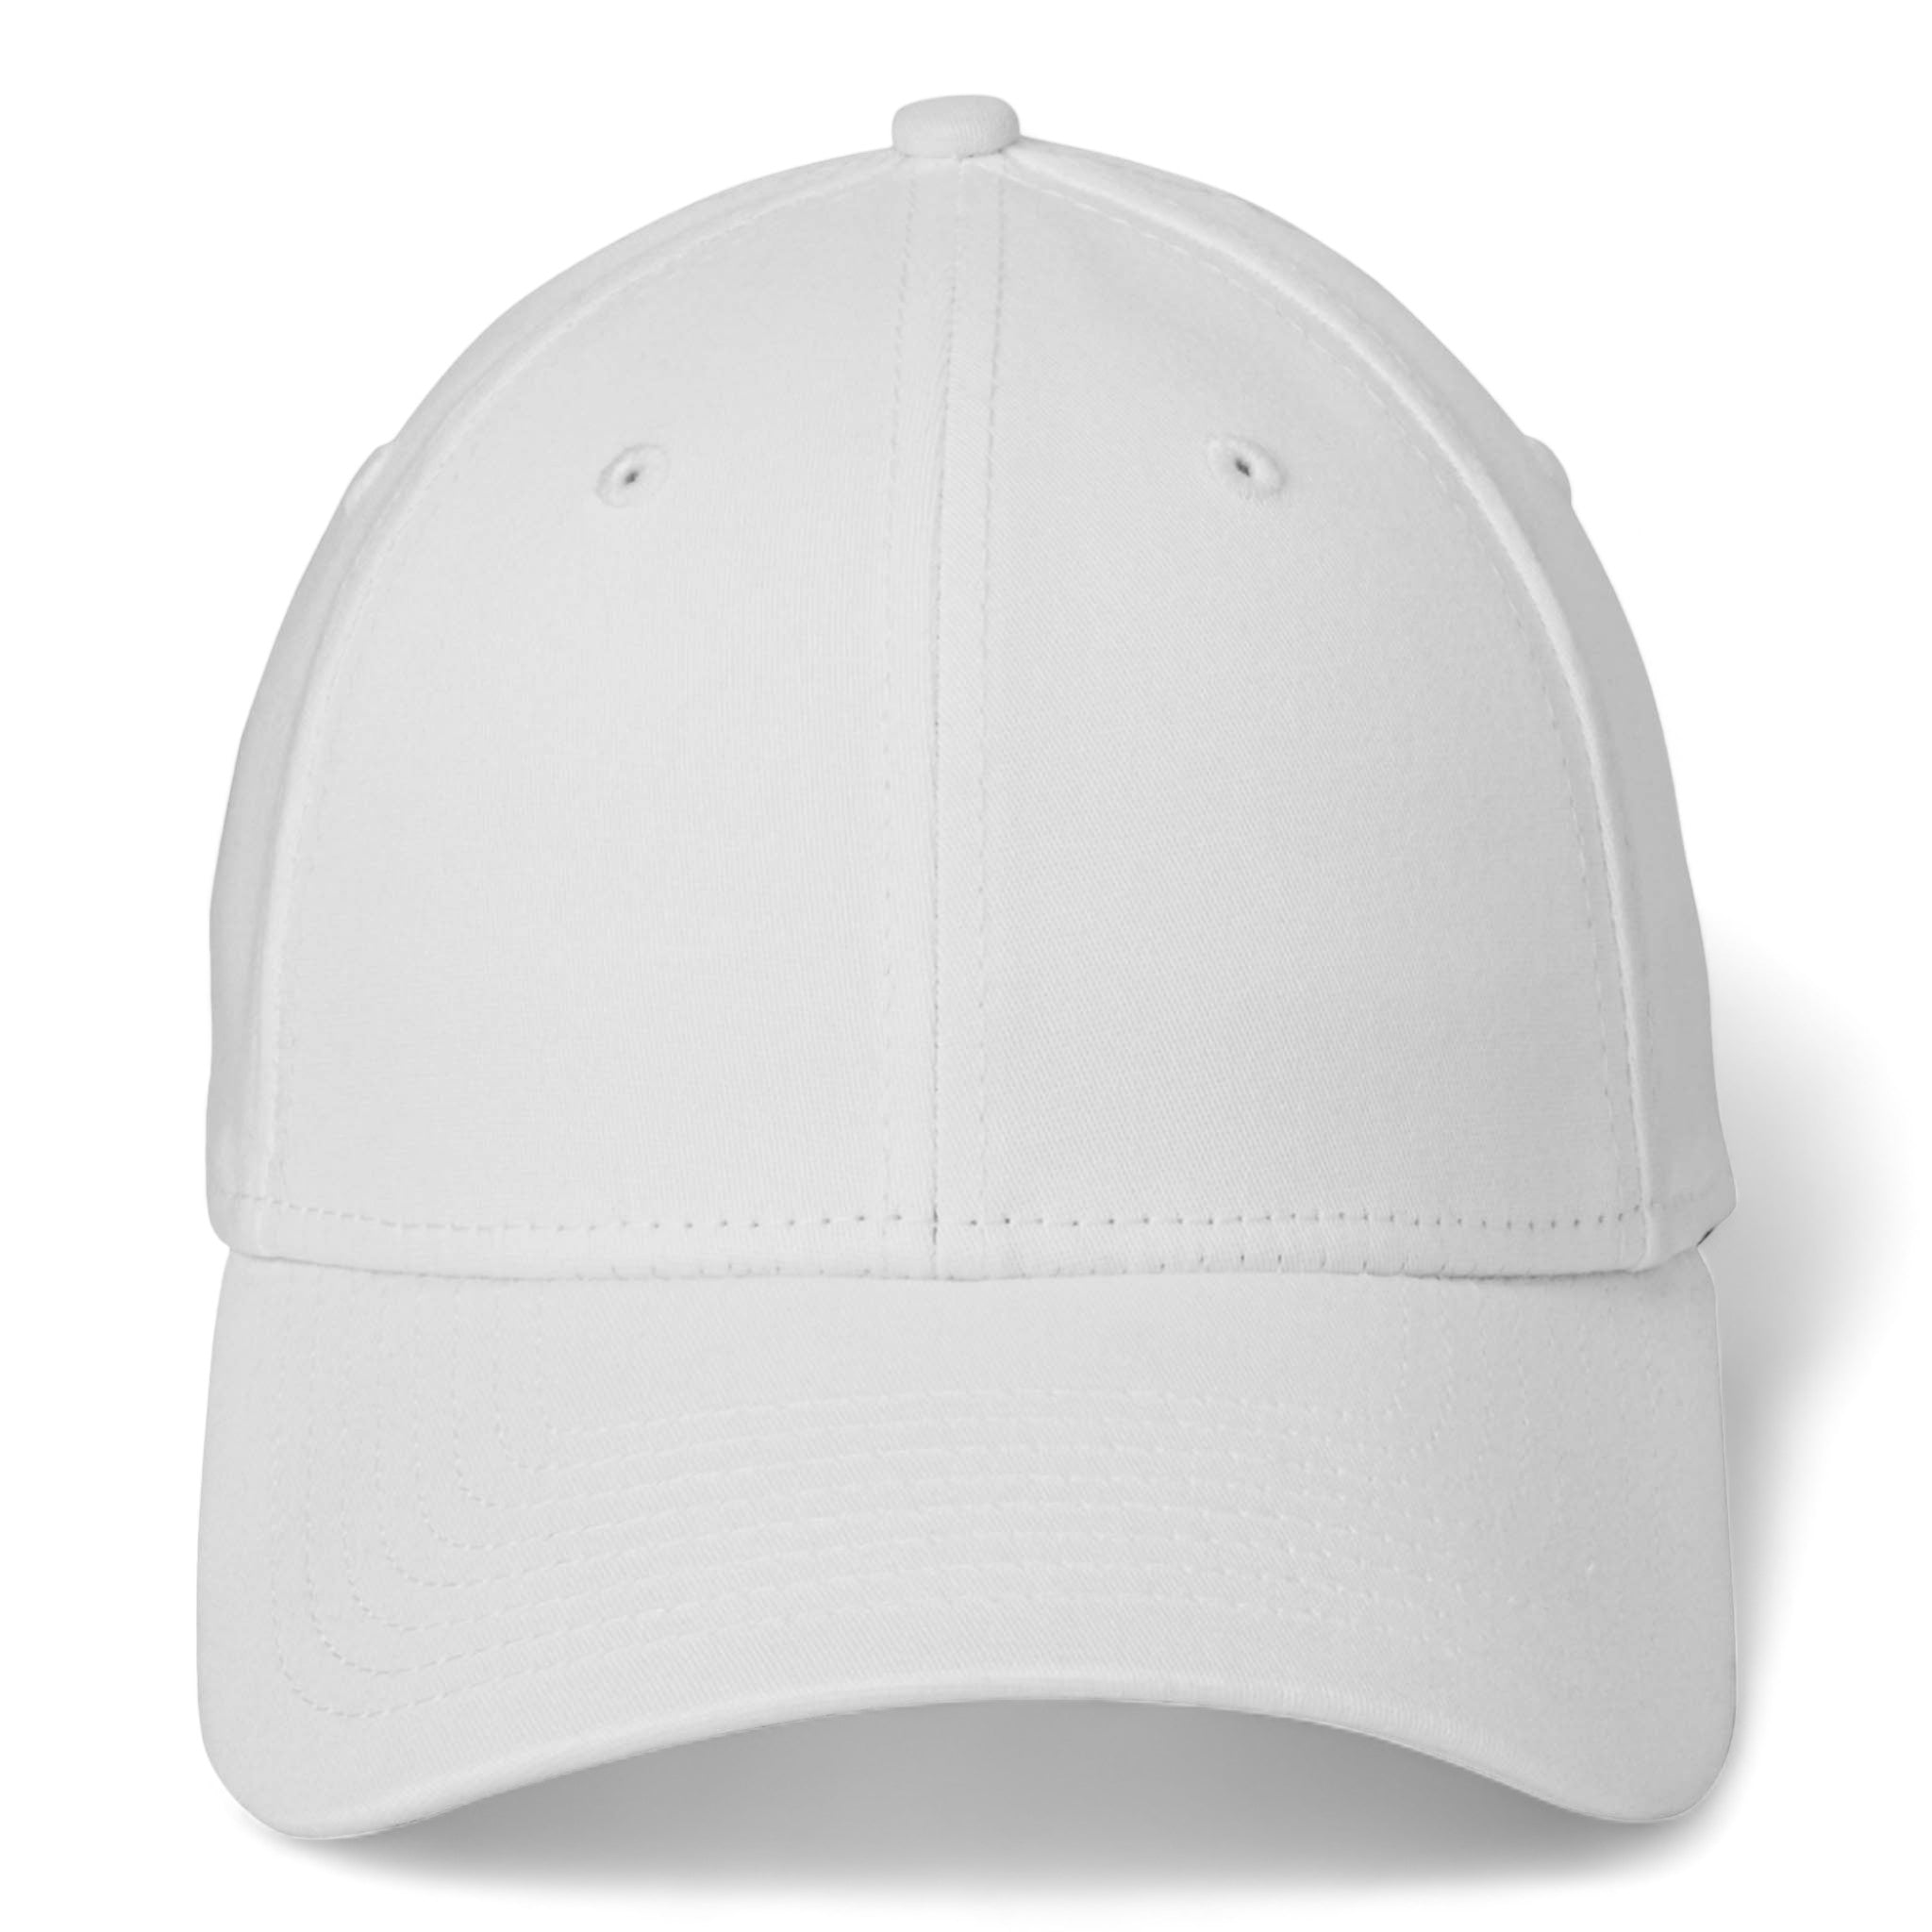 Front view of New Era NE1000 custom hat in white